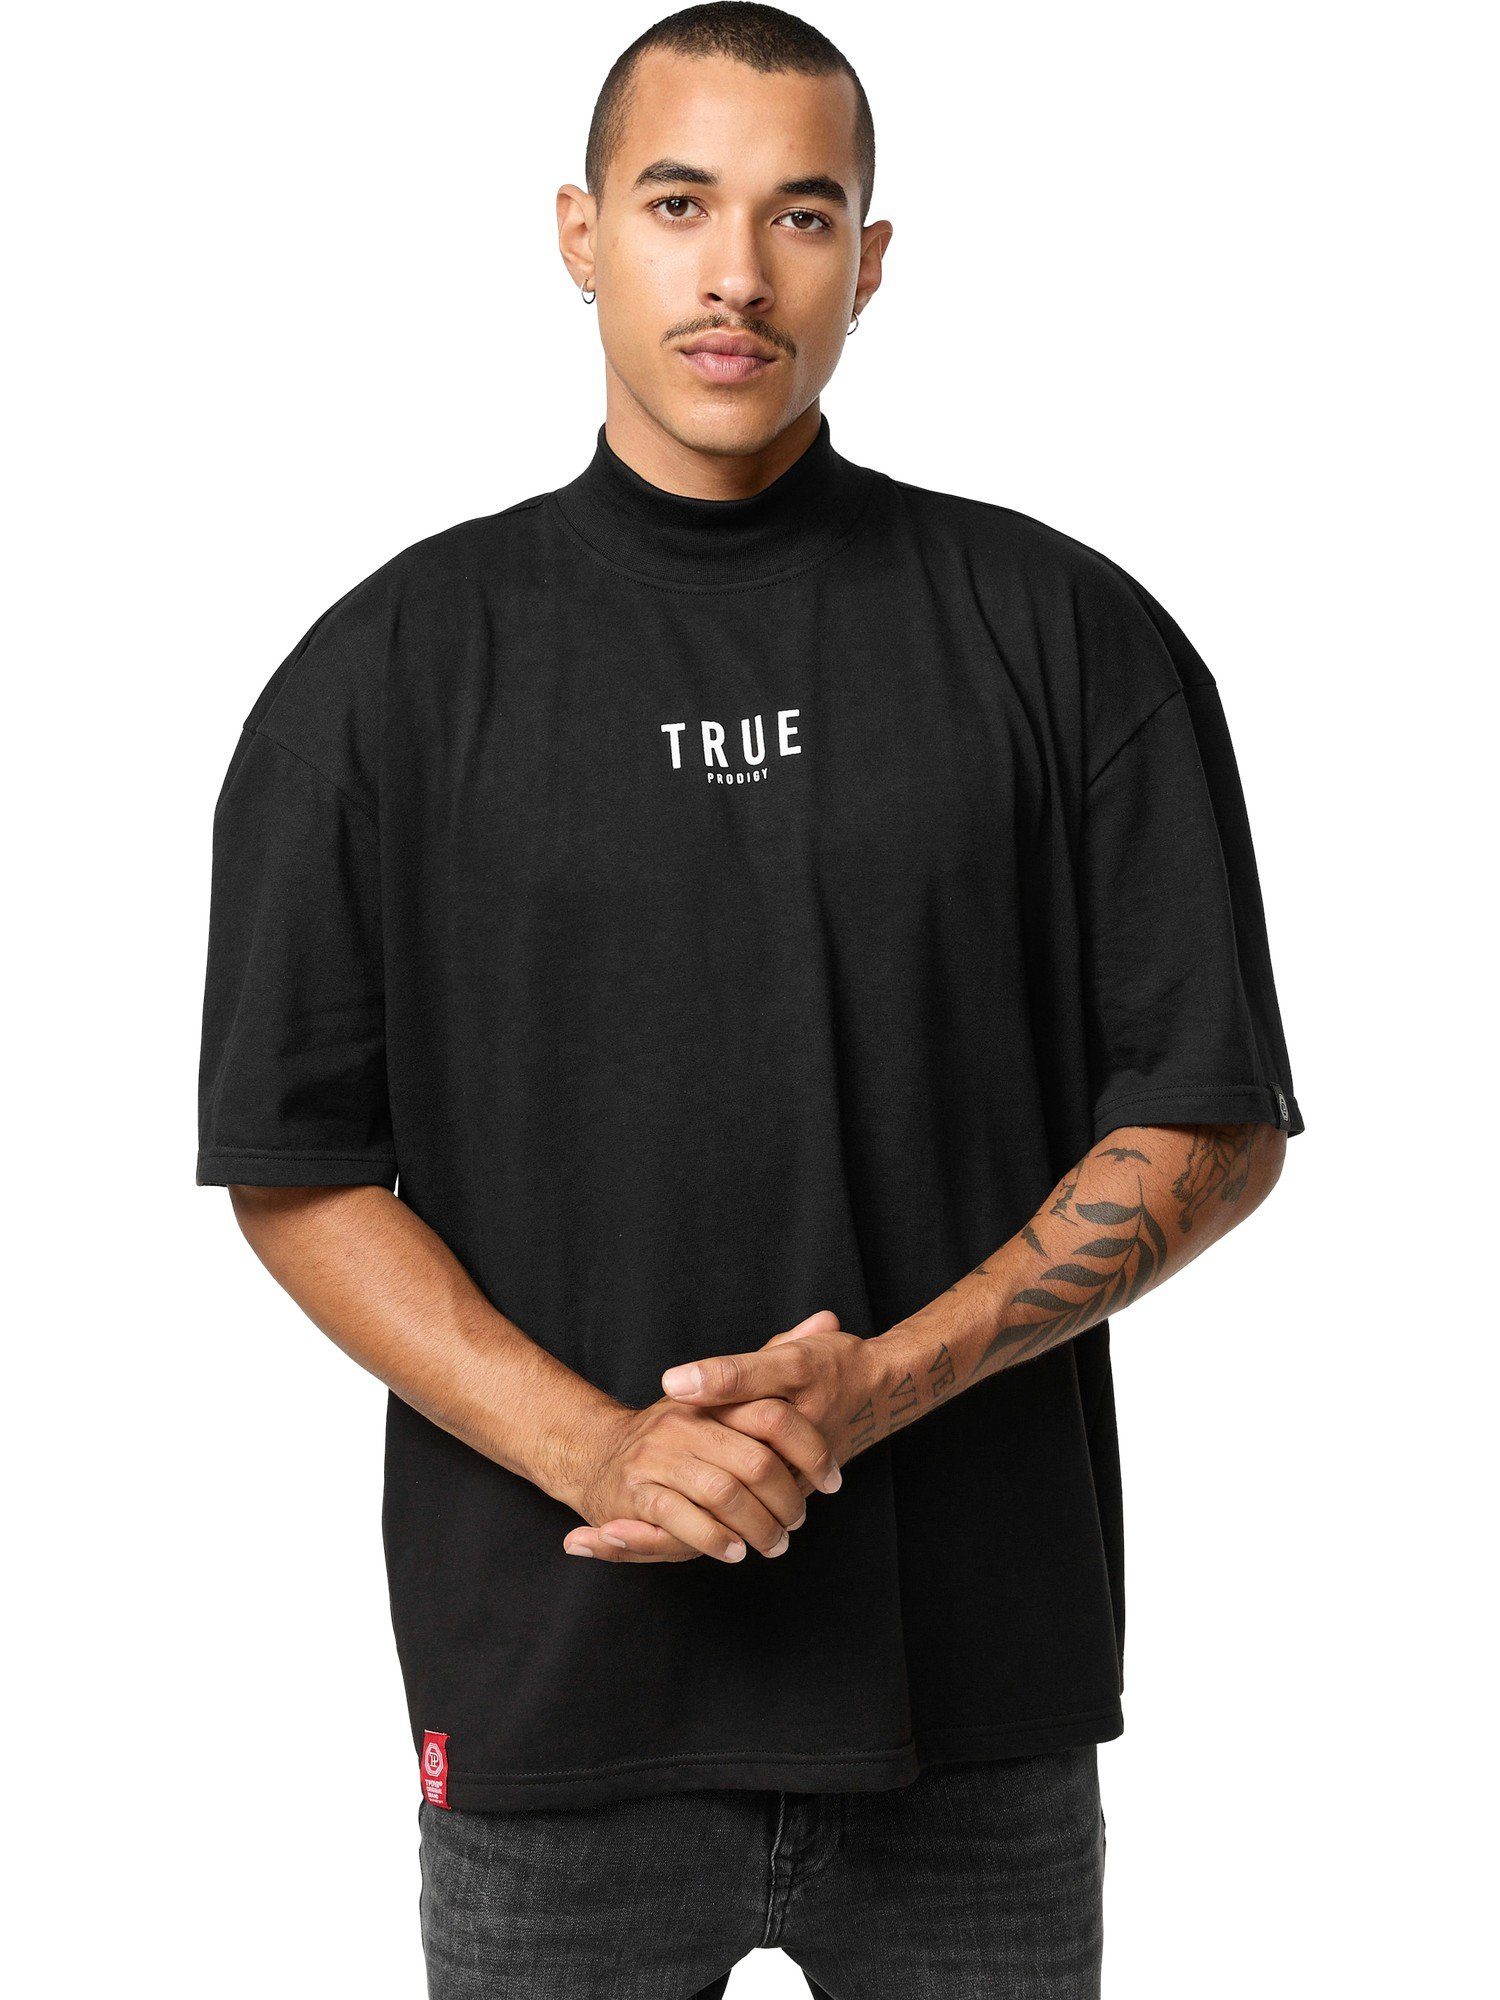 Stoff Black Riley Stehkragen Logoprint trueprodigy dicker Oversize-Shirt